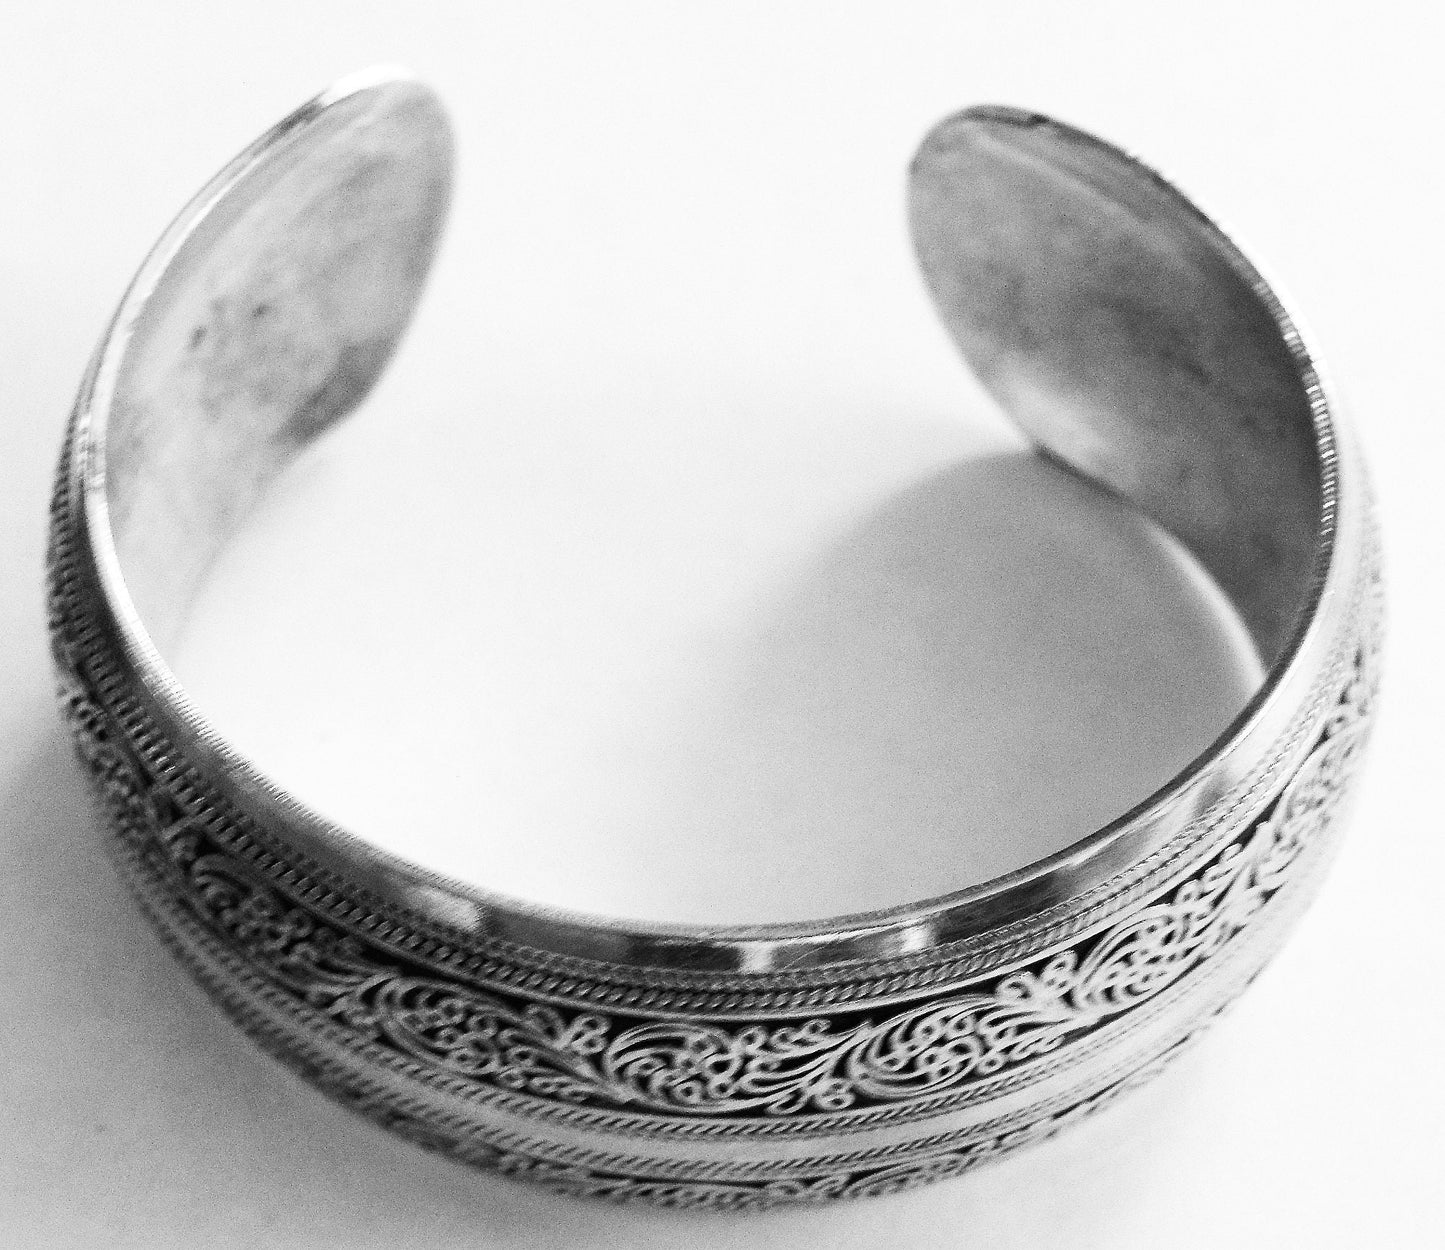 Vintage, heavy gauge Sterling Silver decorated cuff bracelet